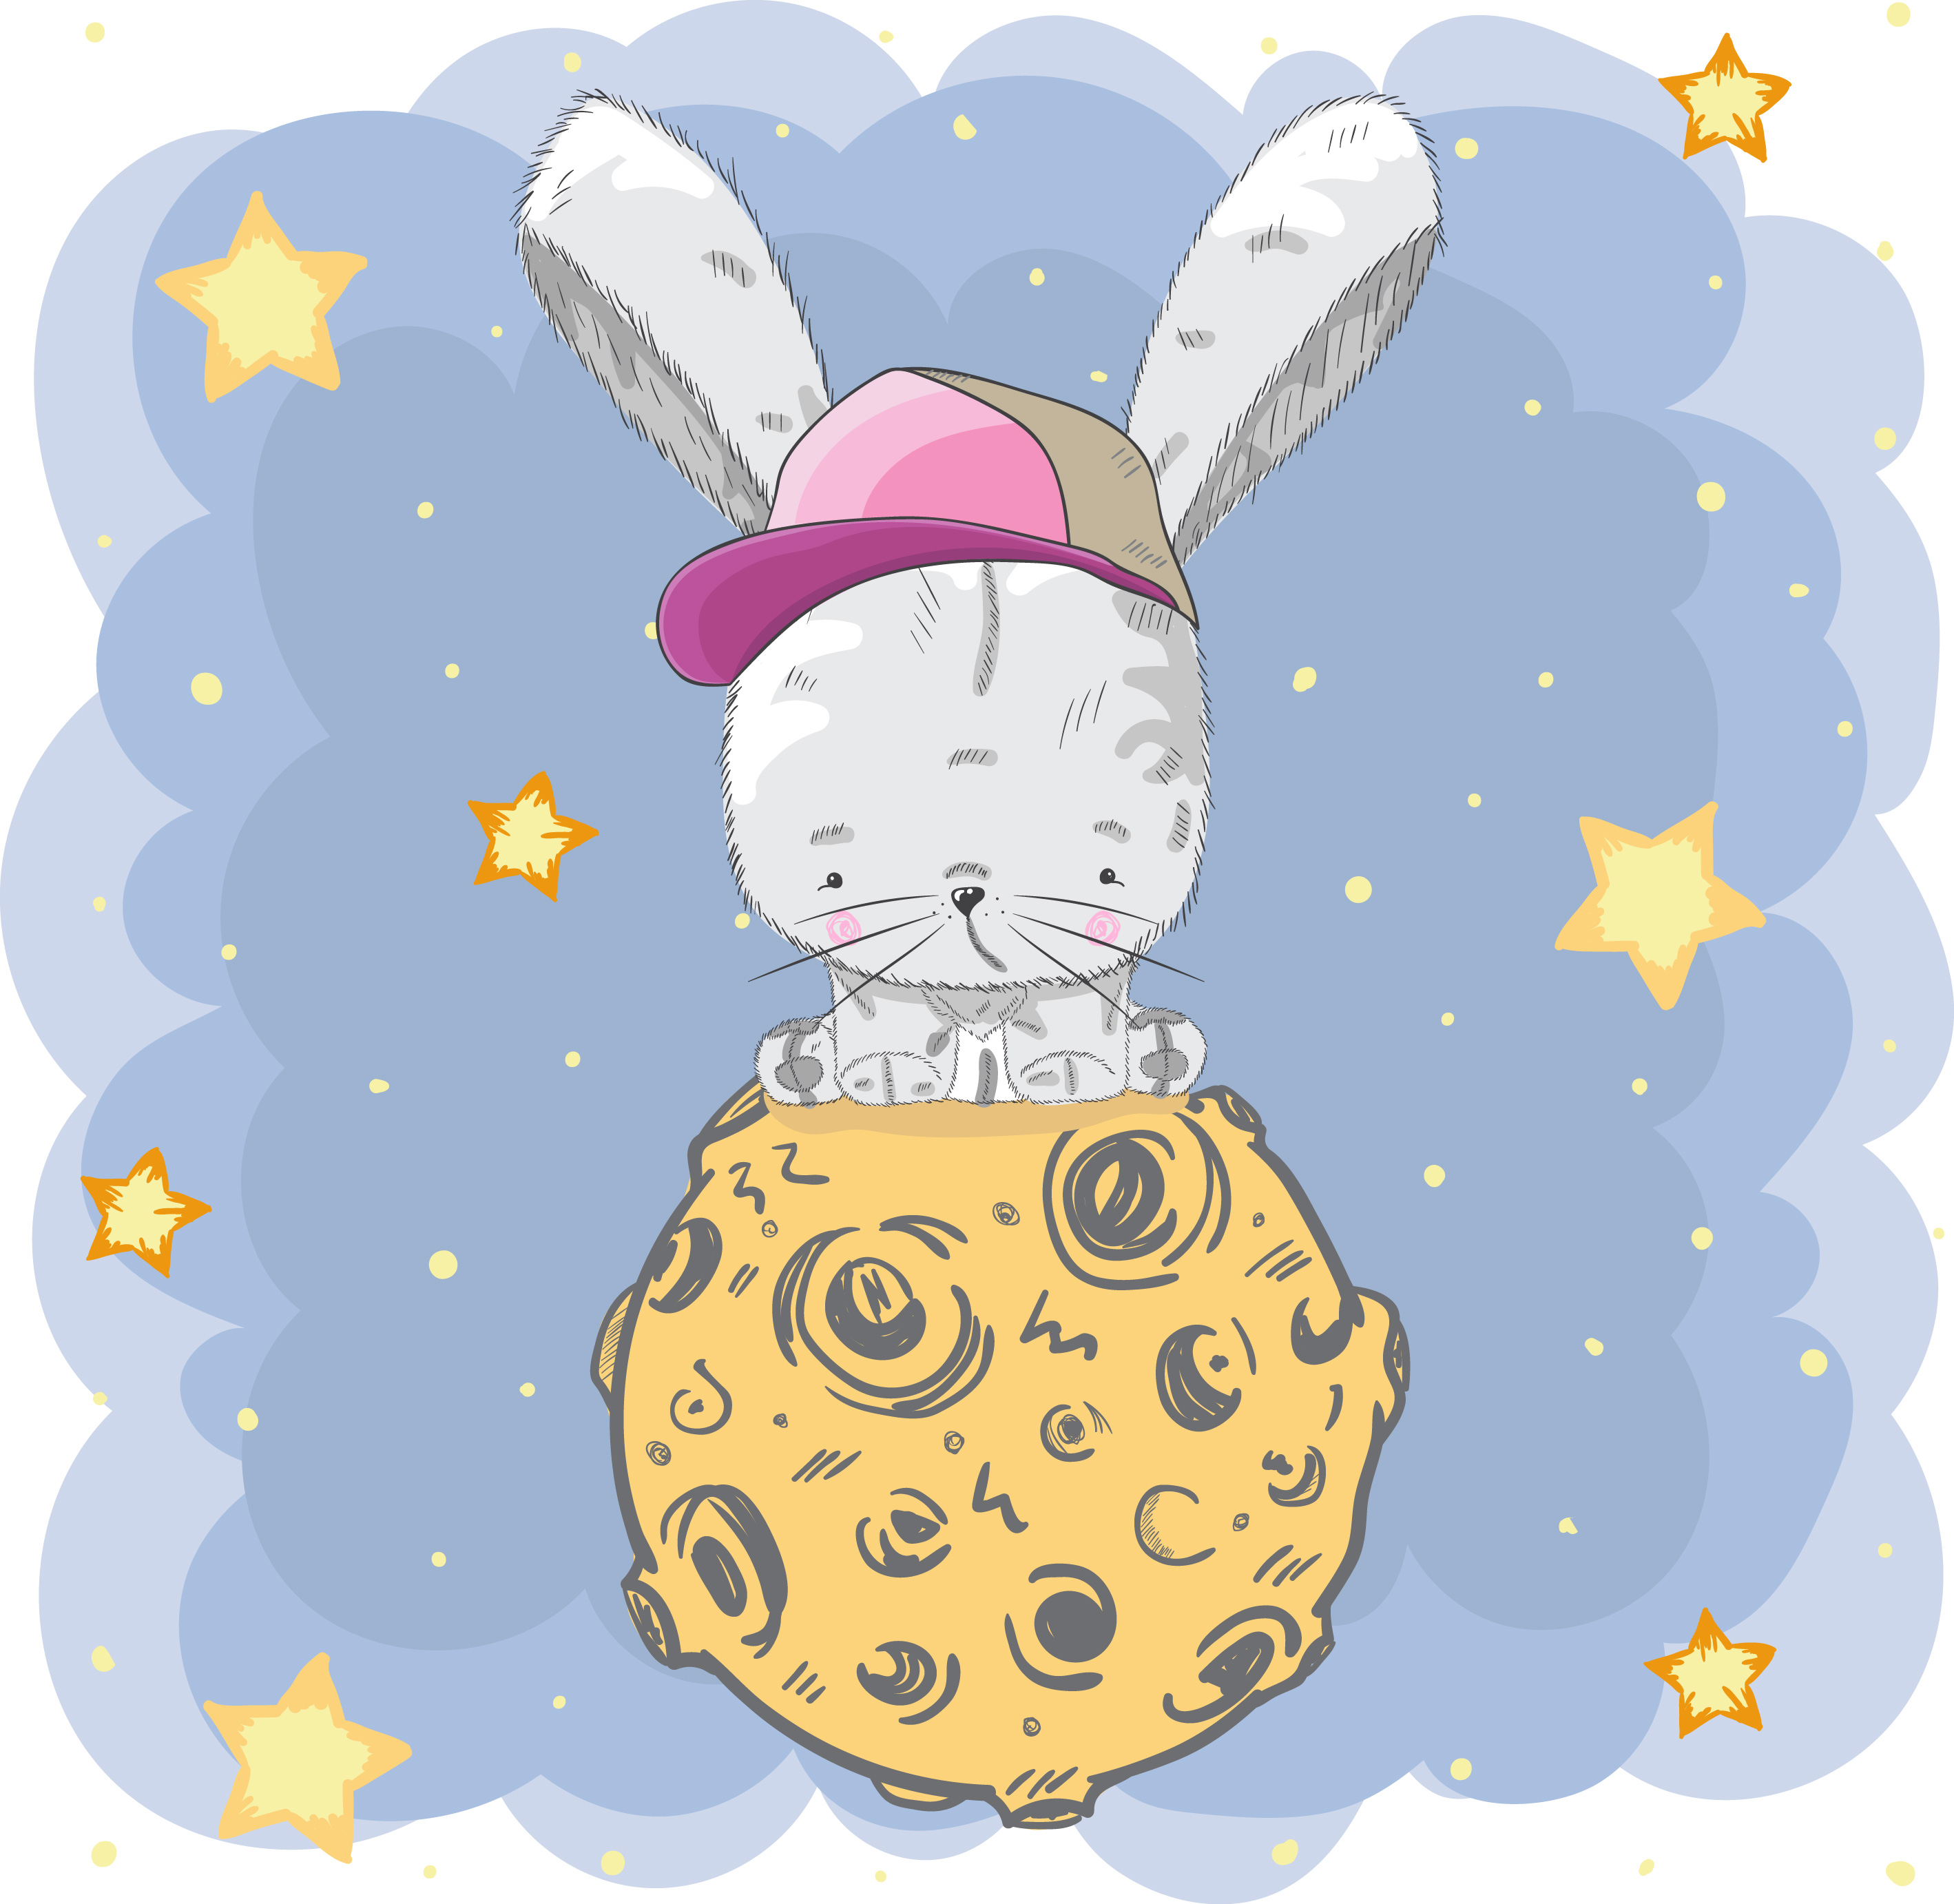 Download Cute baby rabbit - Download Free Vectors, Clipart Graphics & Vector Art